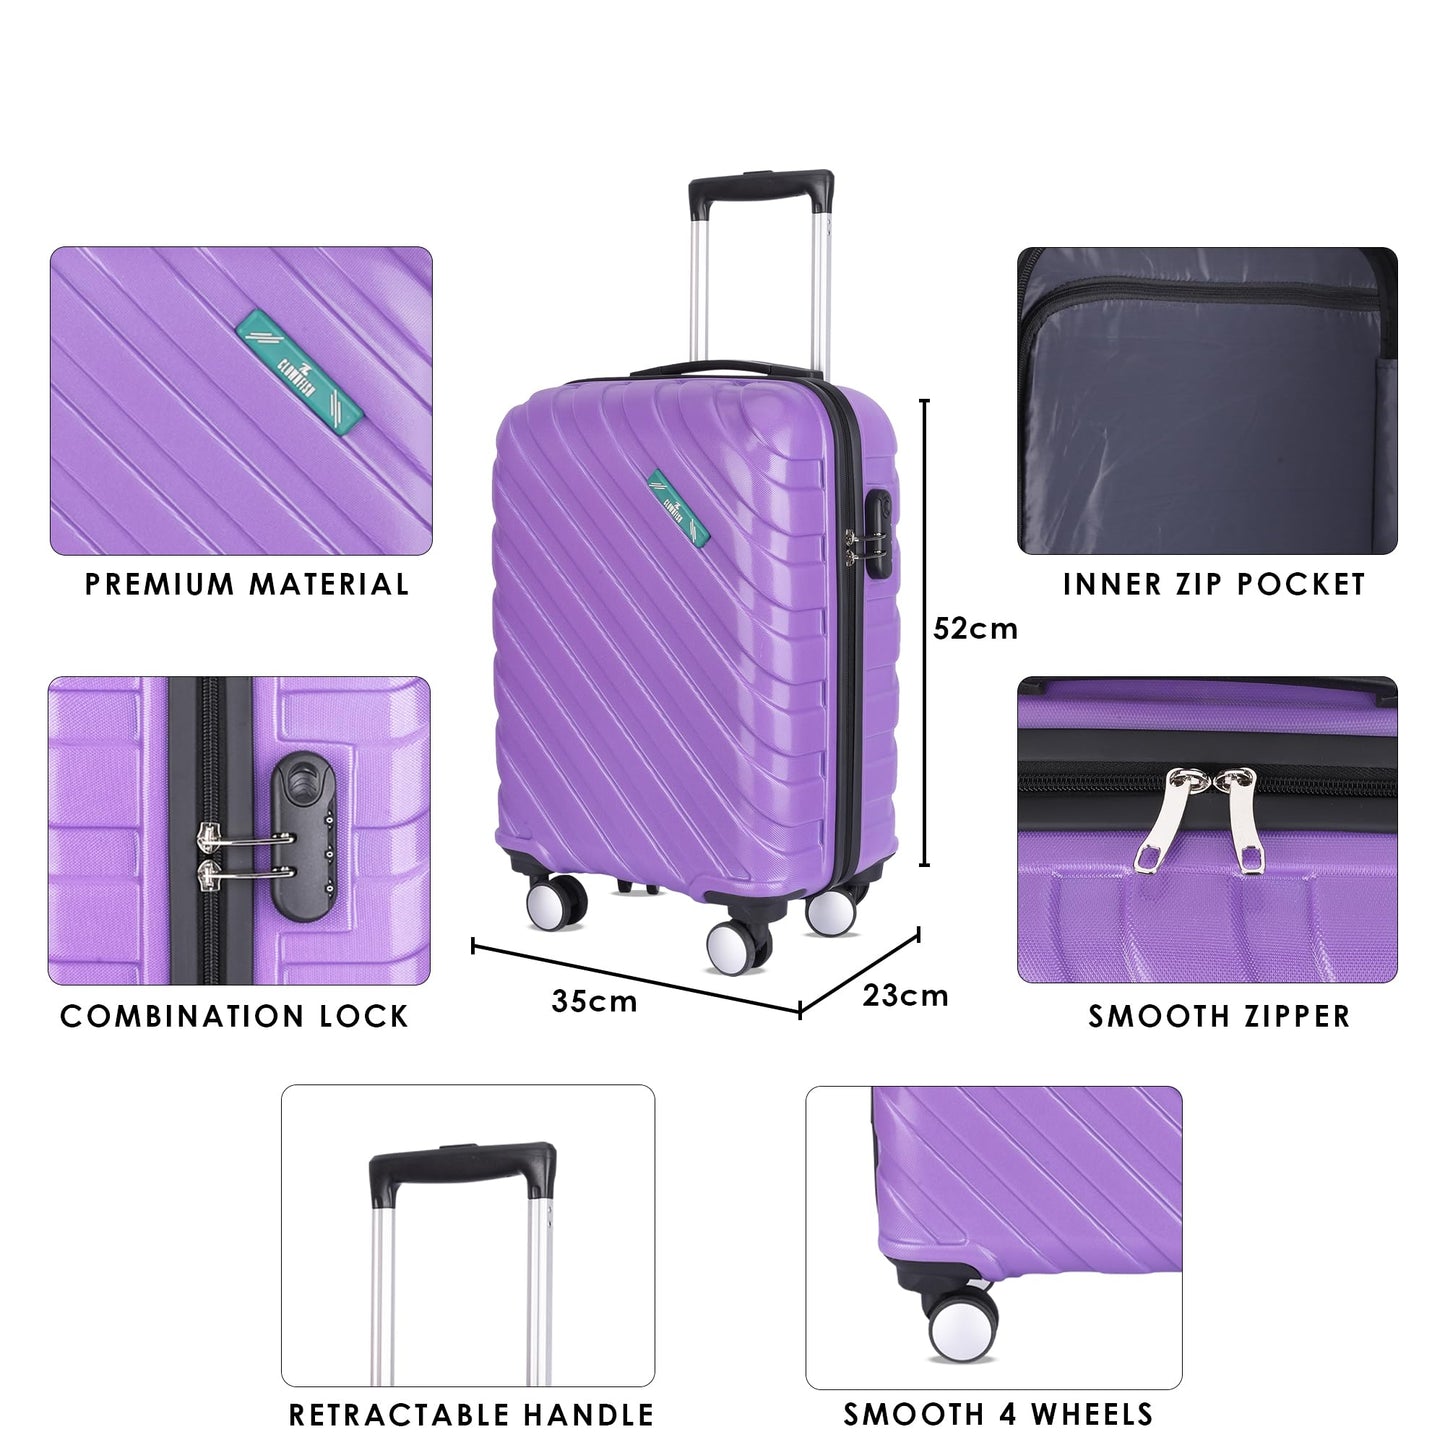 THE CLOWNFISH Wanderwheels Series Luggage ABS Hard Case Suitcase Eight Wheel Trolley Bag- Purple (52 cm- 20.5 inch)